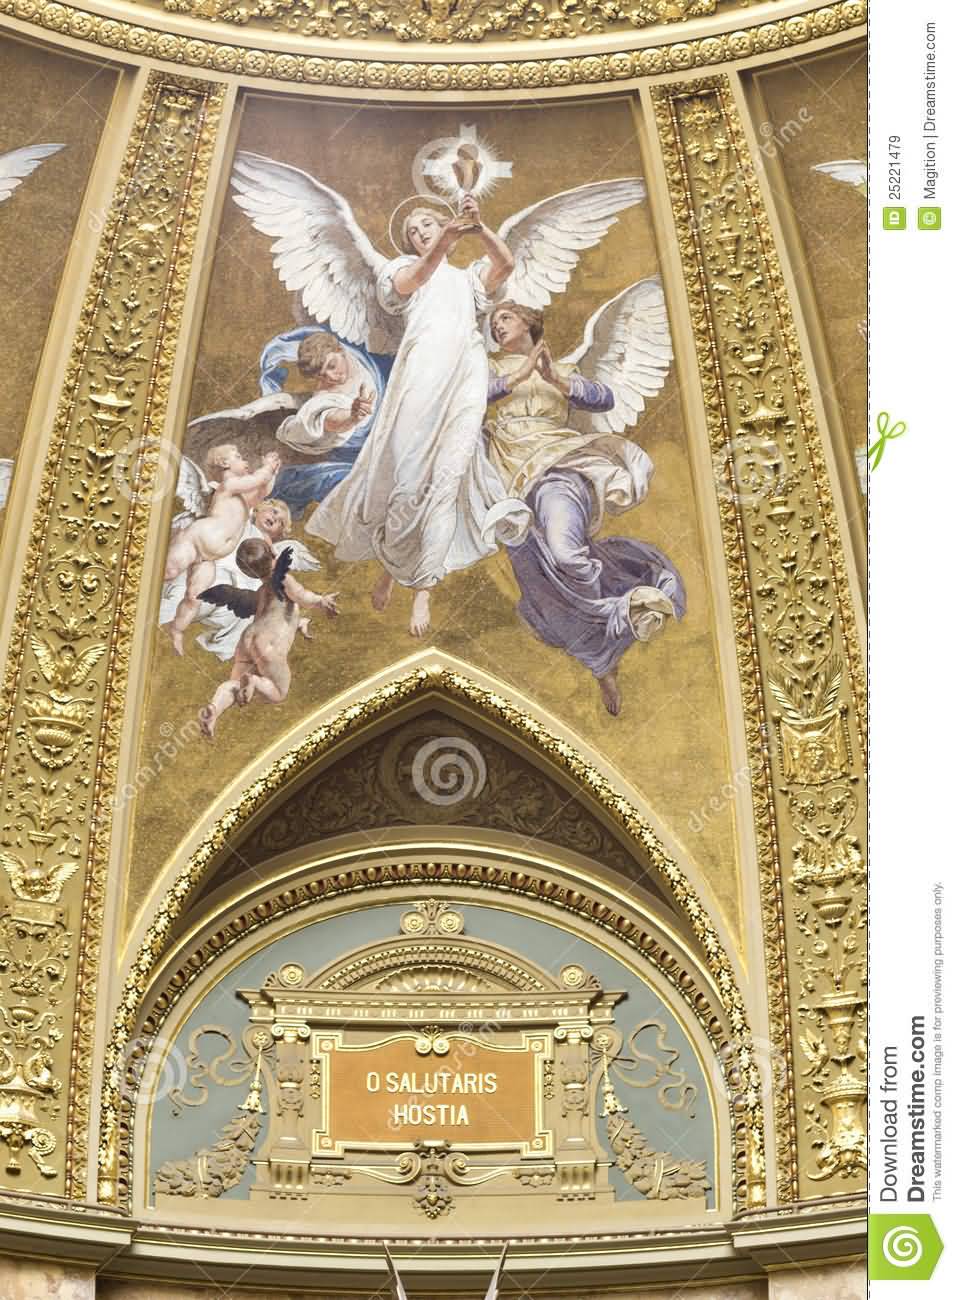 St. Stephen’s Basilica Interior Fresco Details